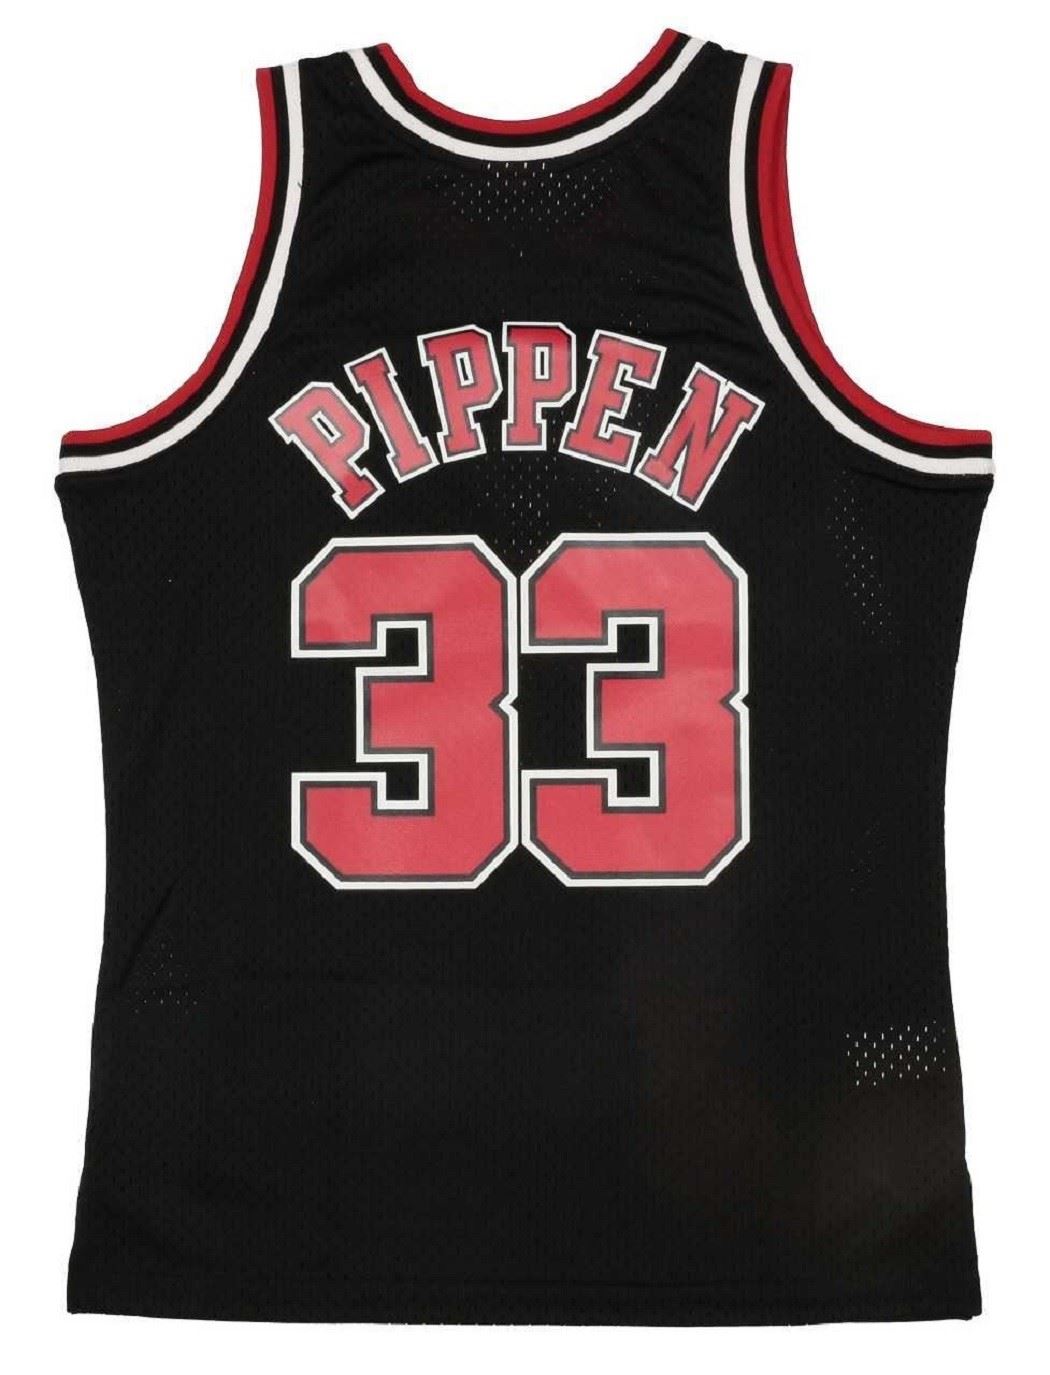 Scottie Pippen #33 Chicago Bulls NBA Kids Swingman Alternate Jersey Mitchell & Ness